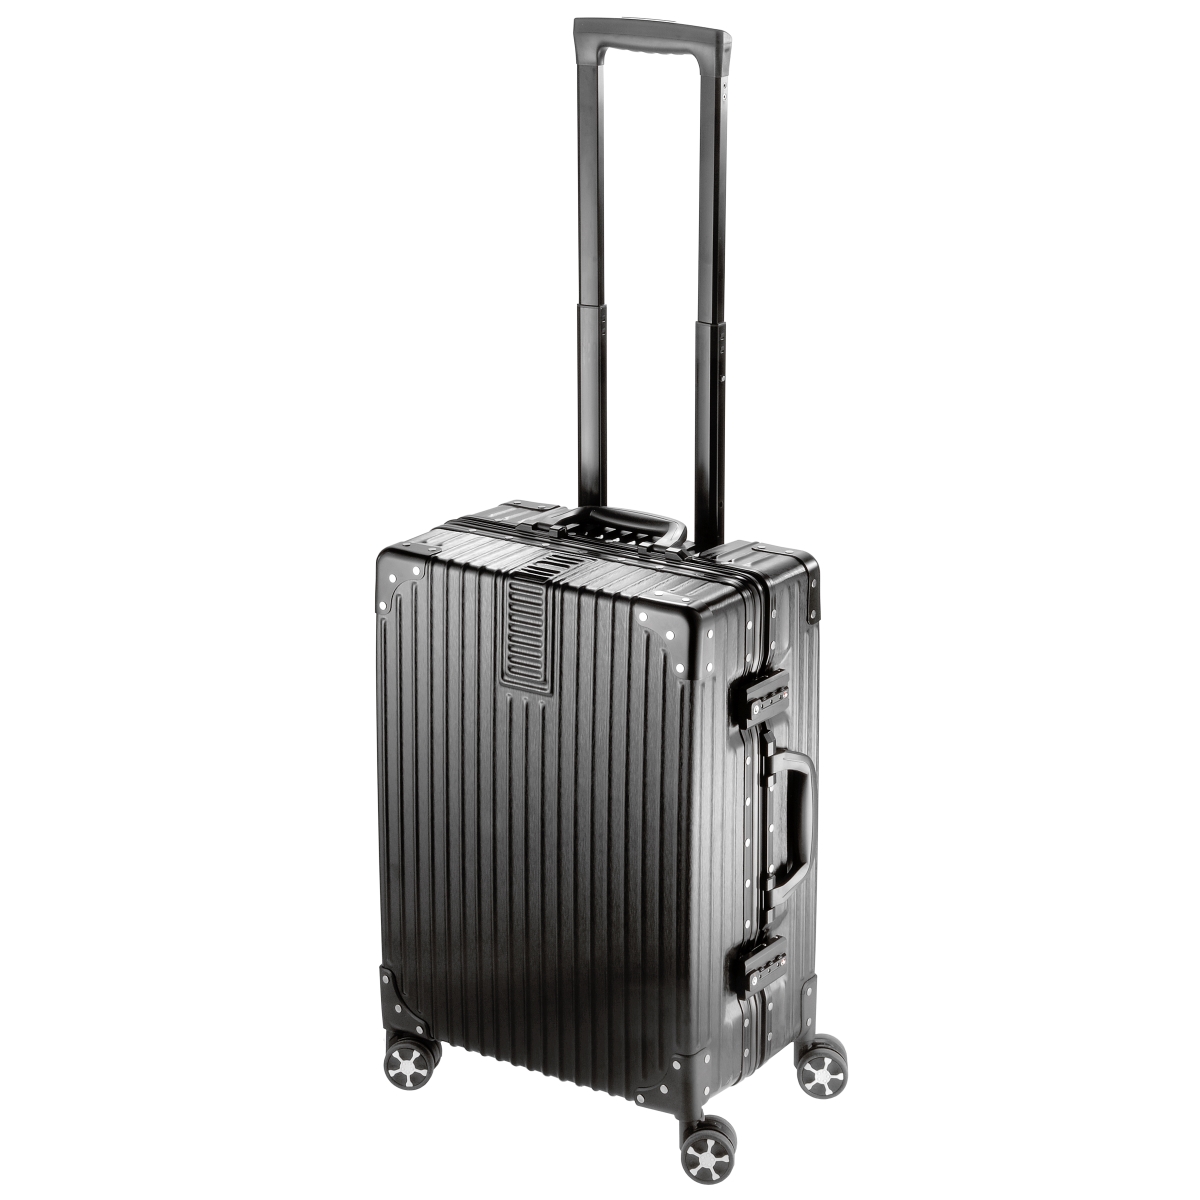 Bd40-6018bk-20 20 In. Abs Hard-side 360 Deg Spinner Luggage, Black